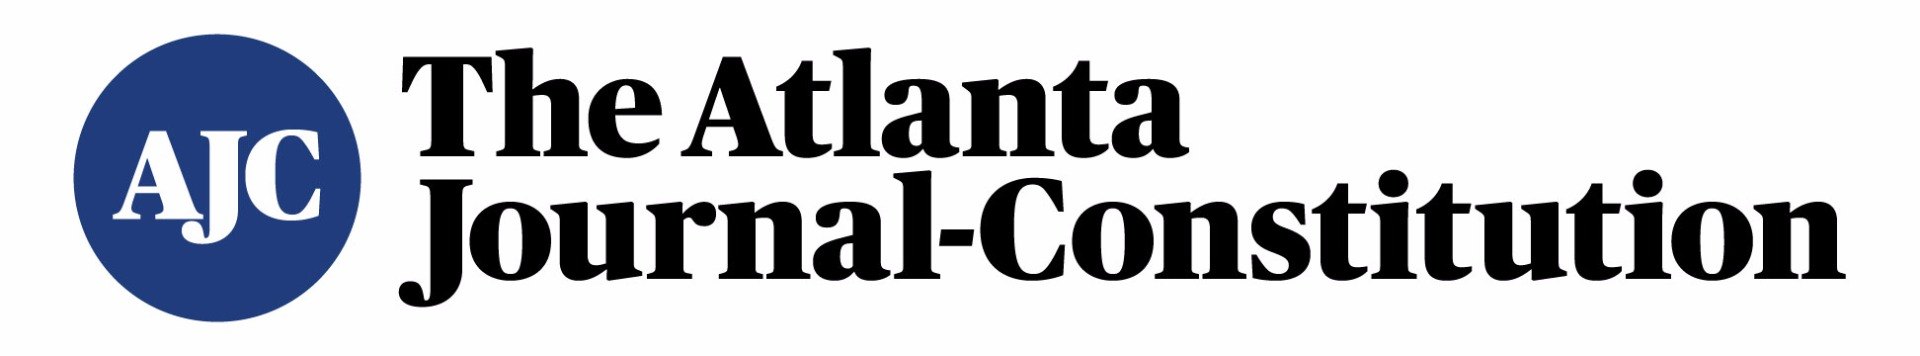 AJC The Atlanta Journal-Constitution